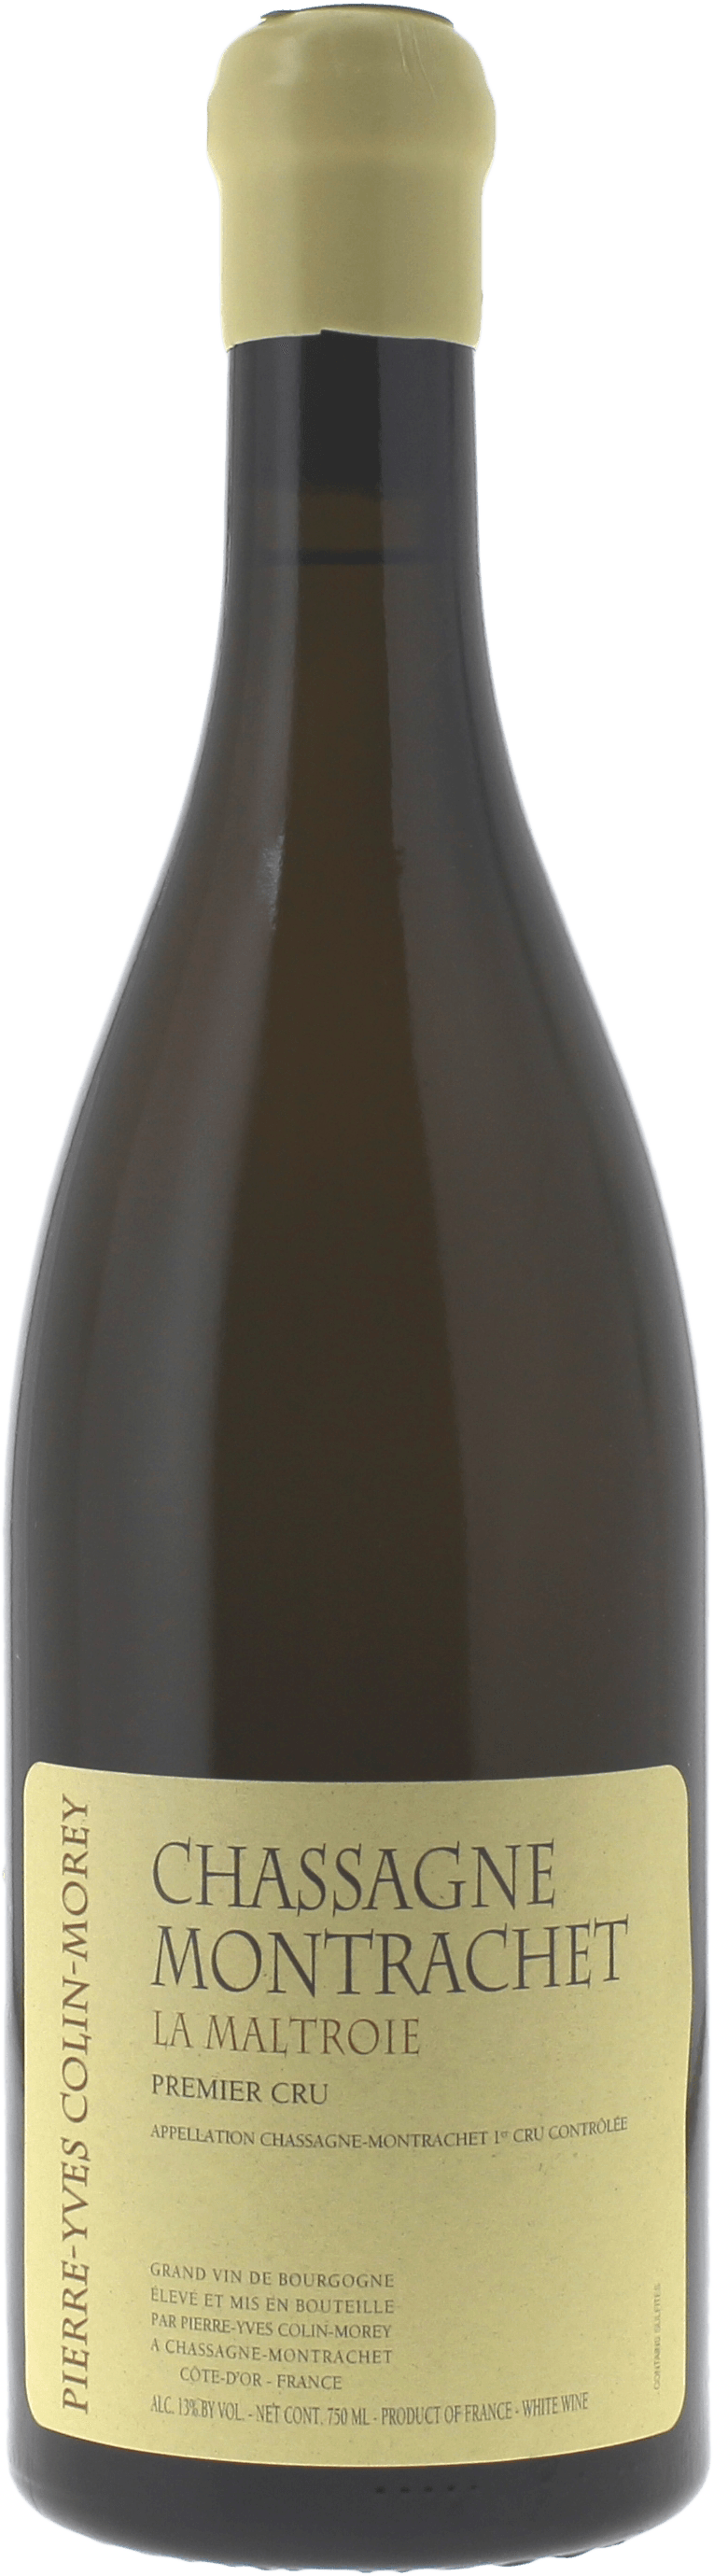 Chassagne montrachet 1er cru maltroie 2018 Domaine COLIN MOREY, Bourgogne blanc